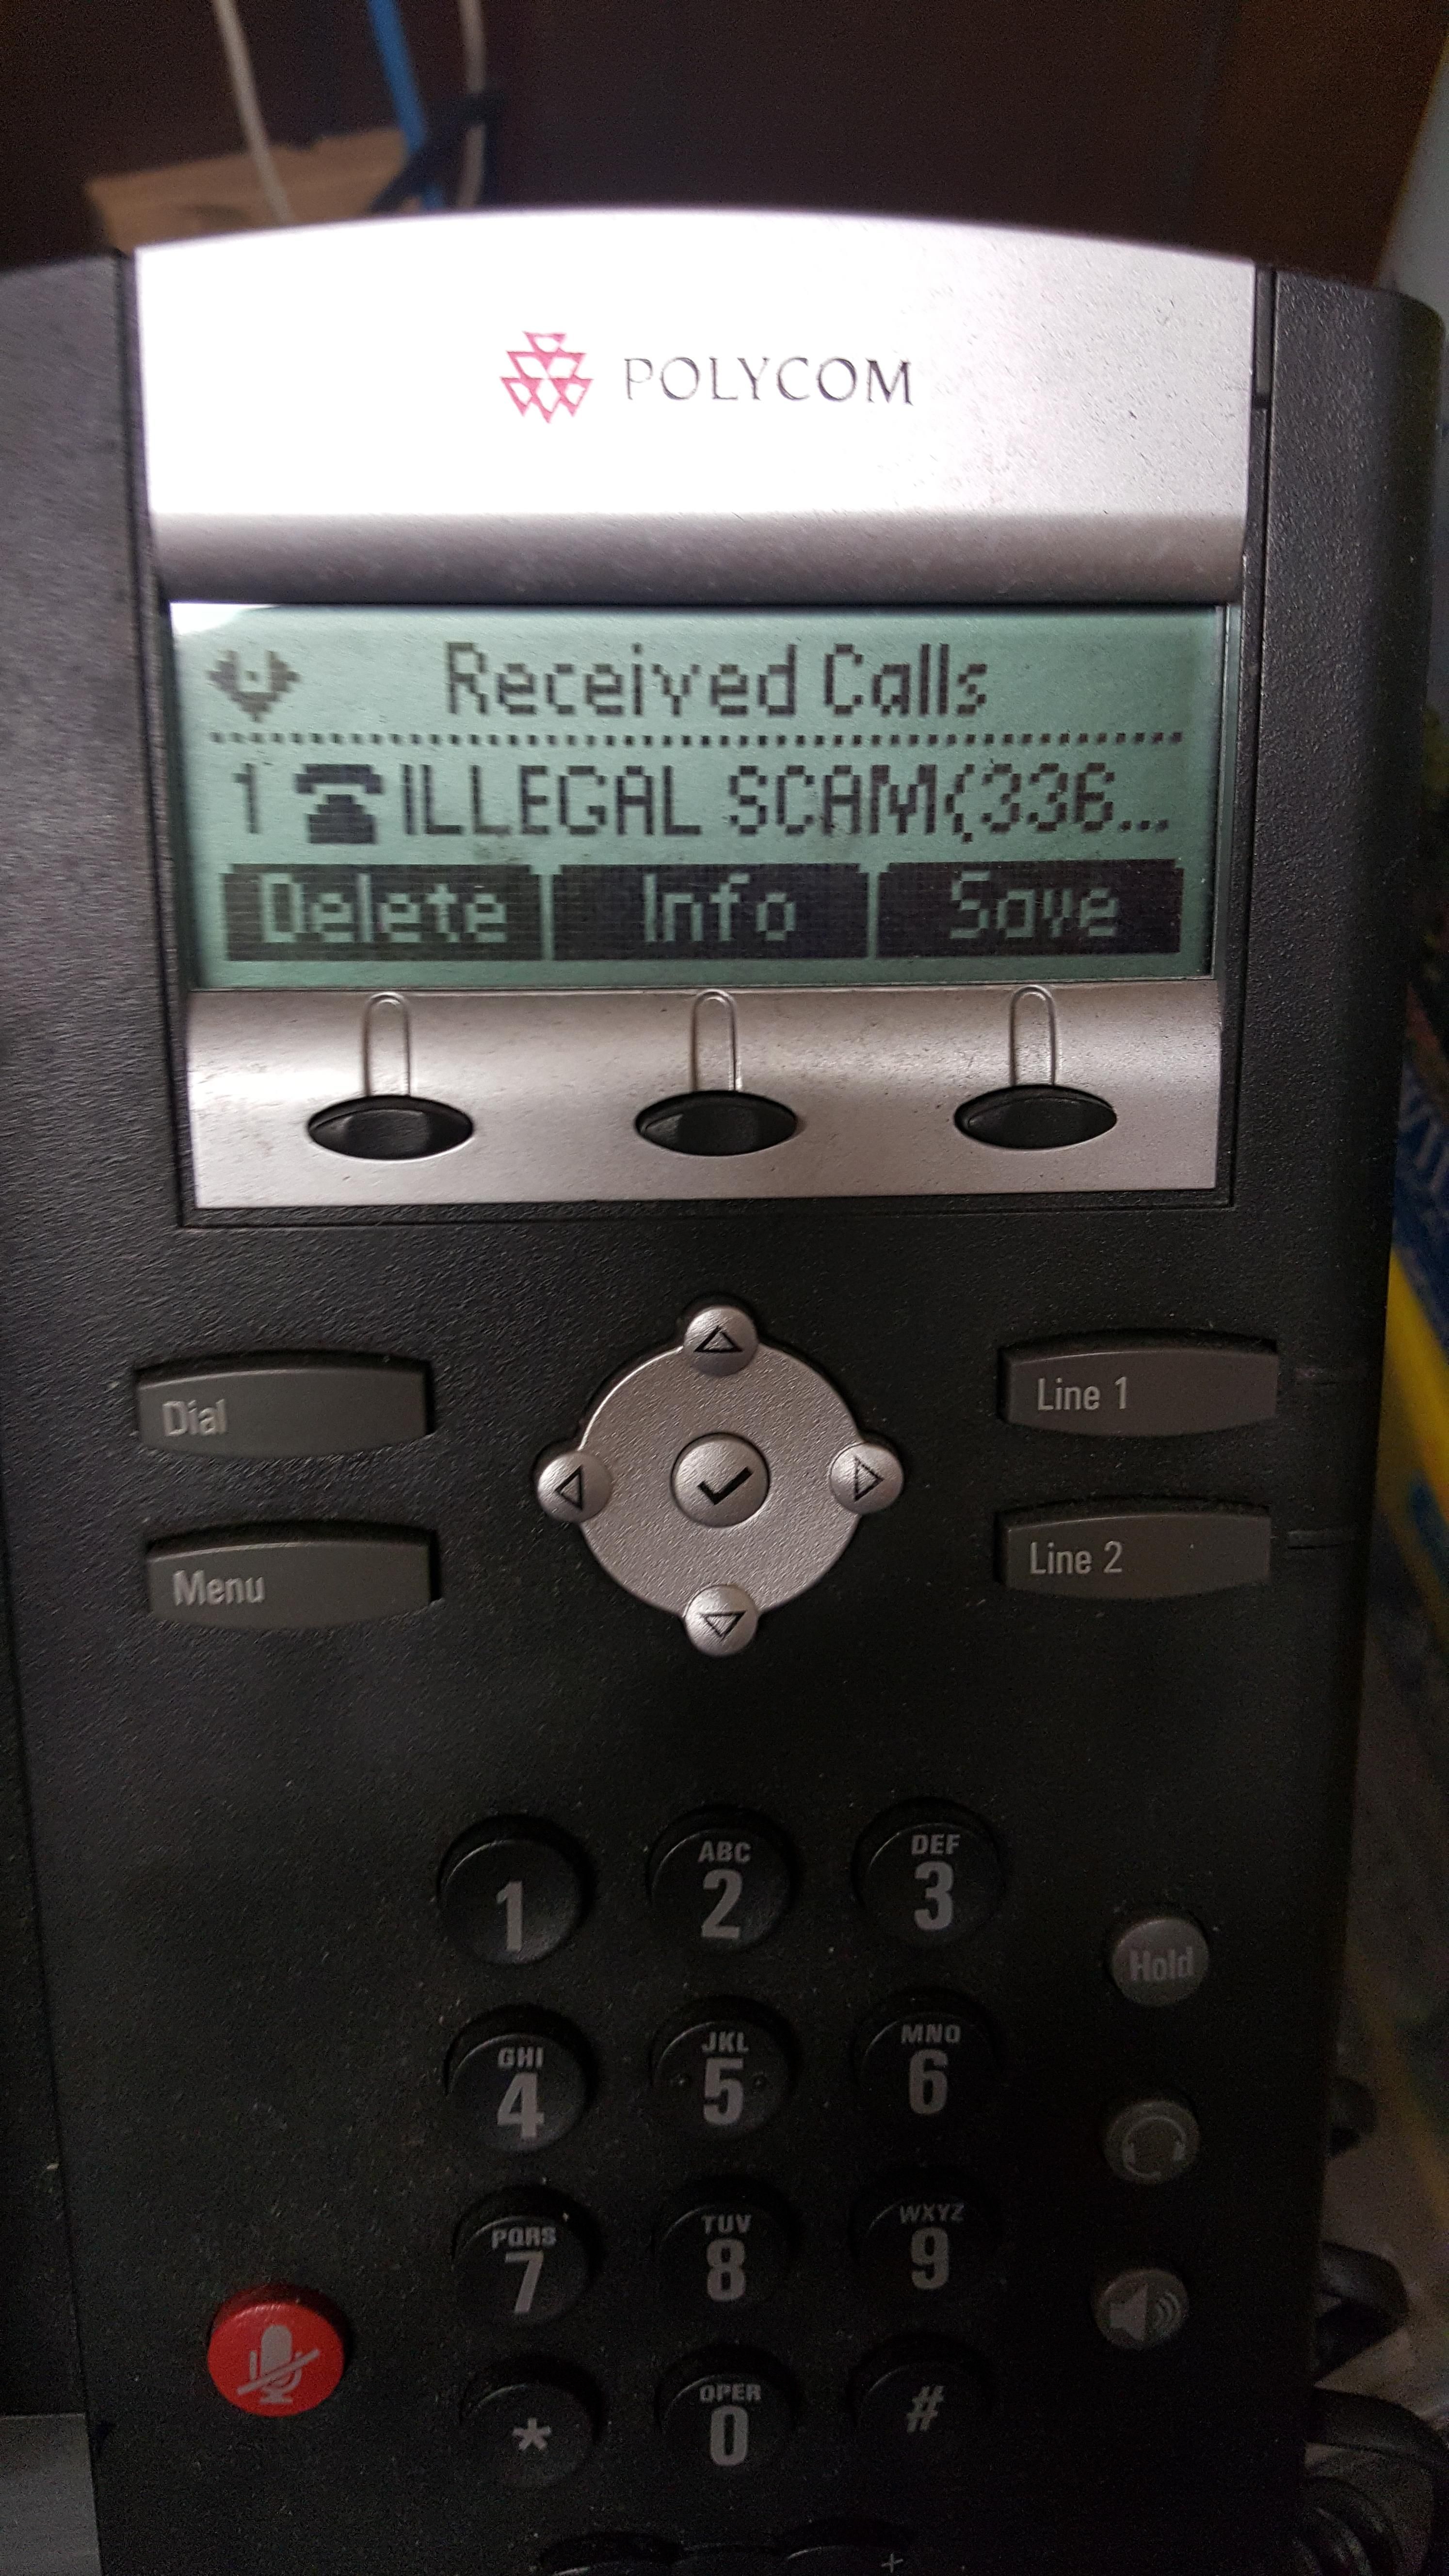 Thanks caller id!